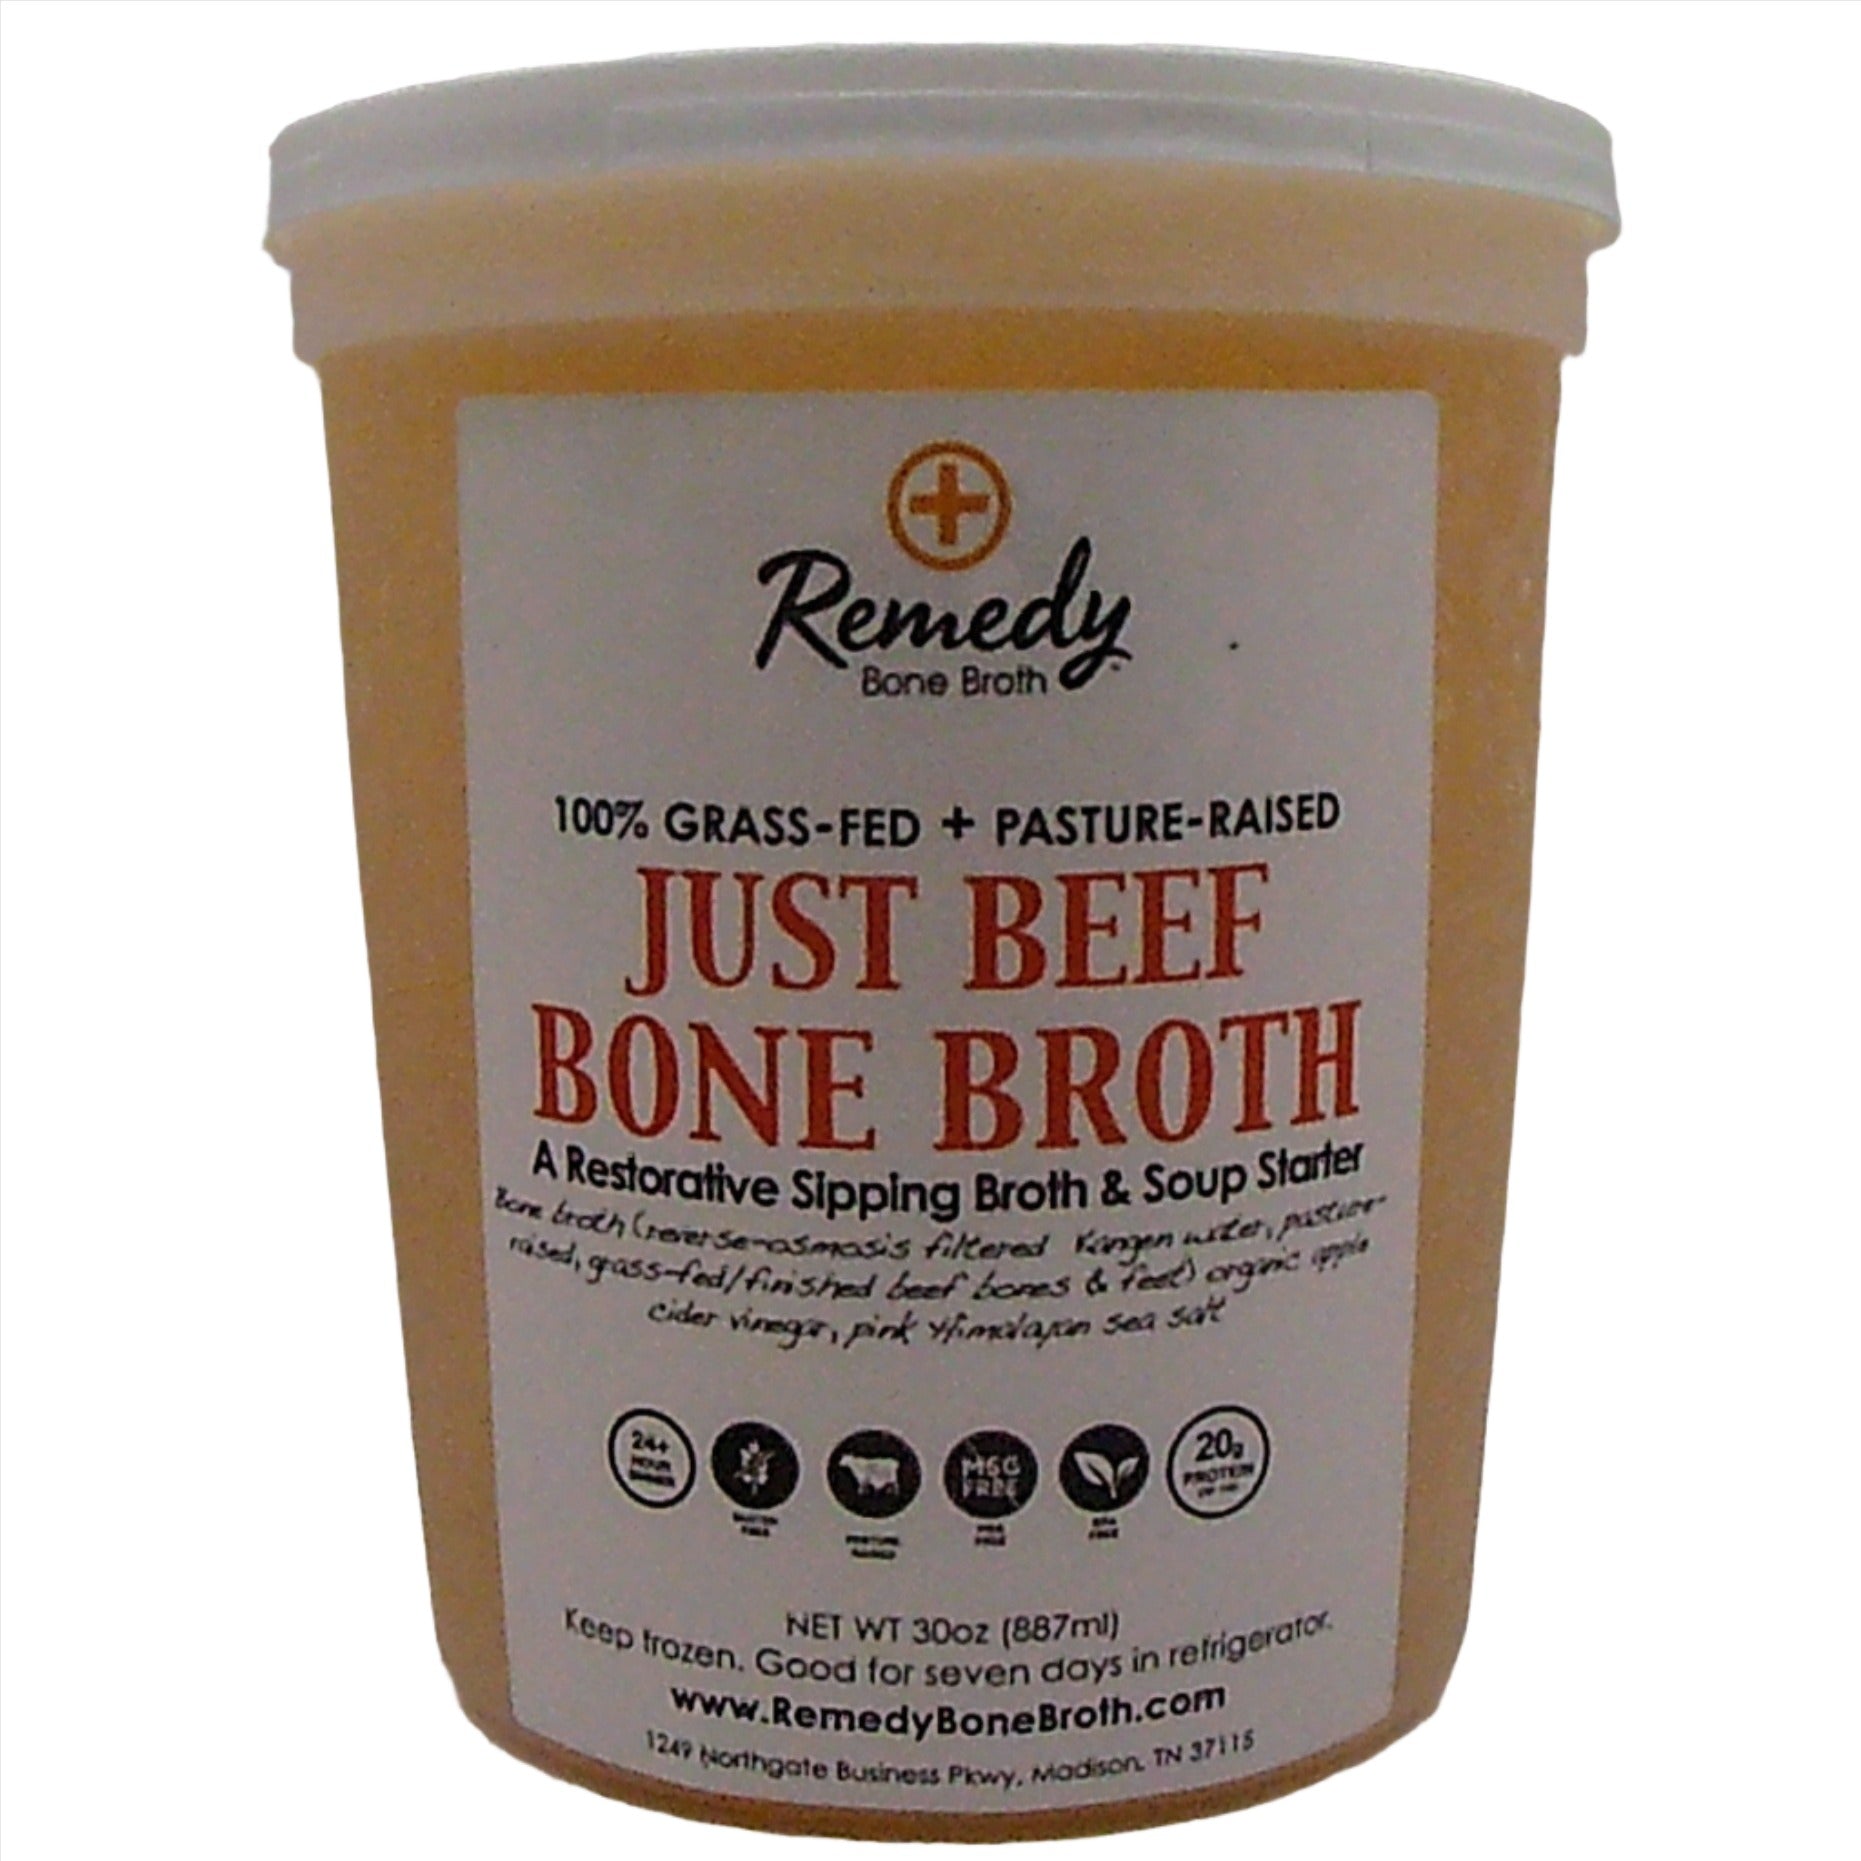 Just Beef Bone Broth